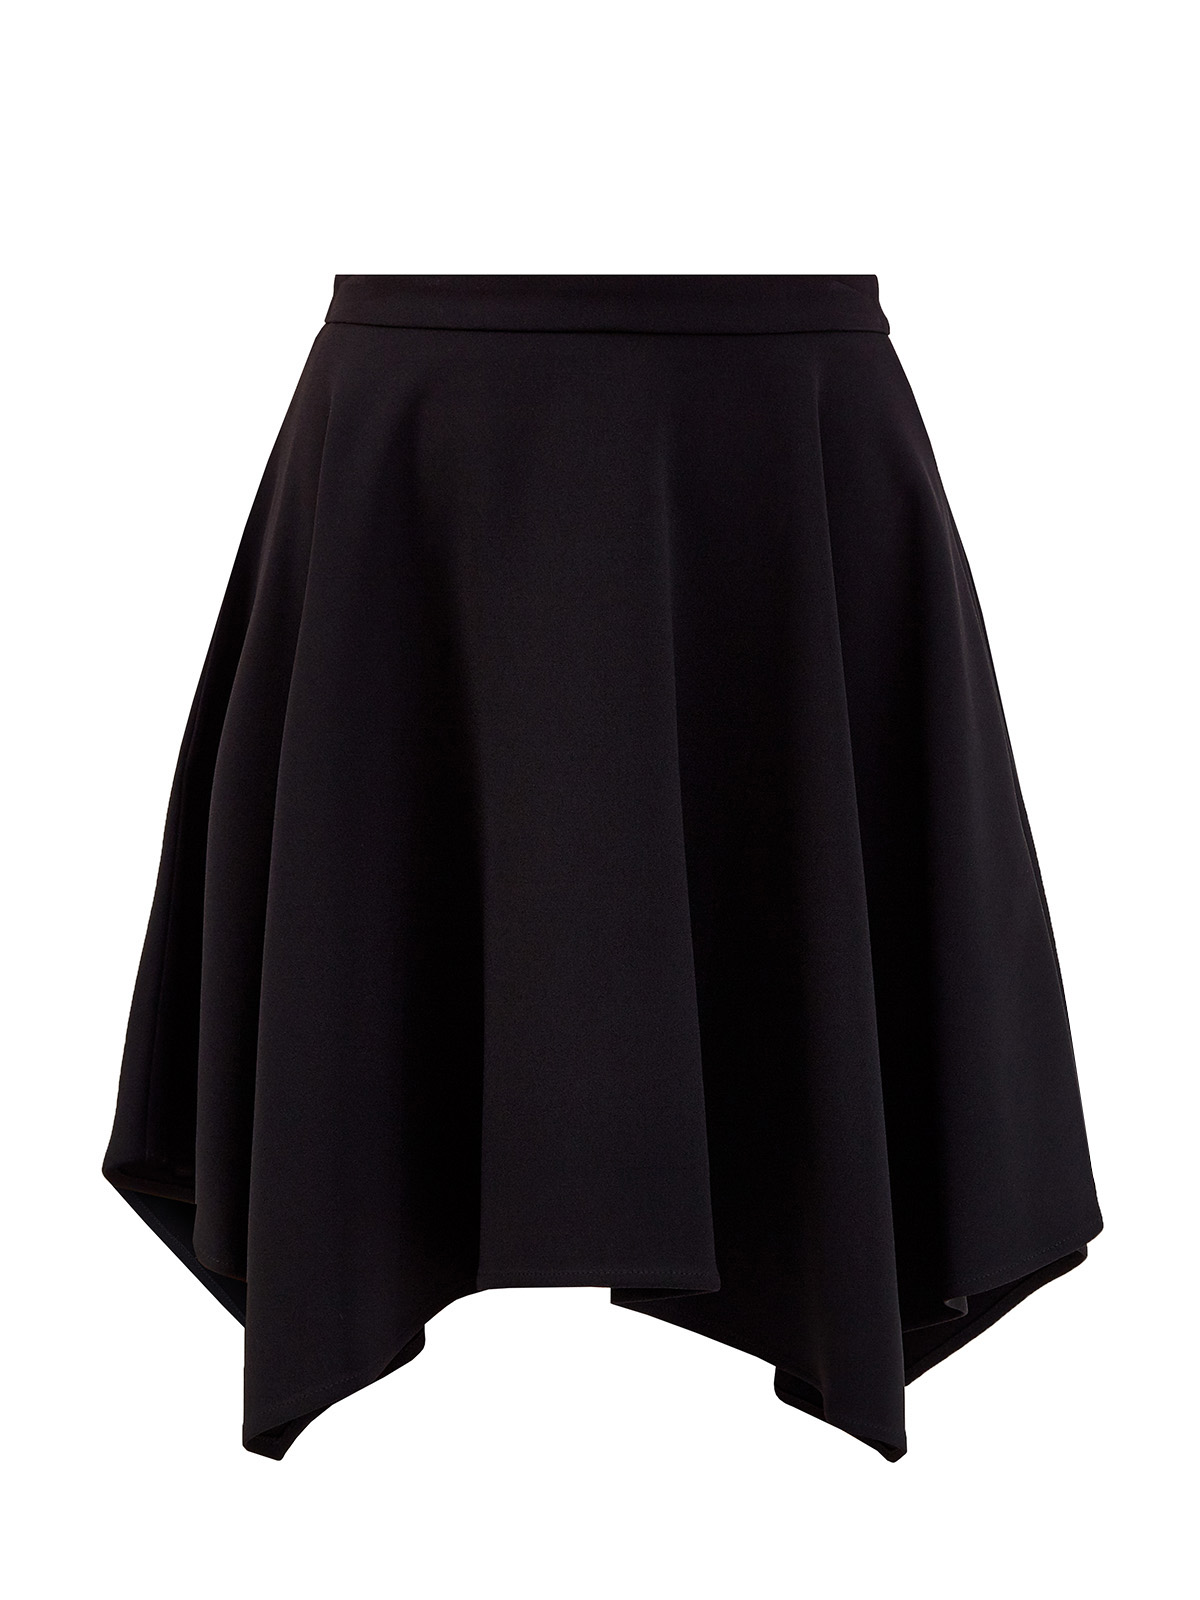 Асимметричная юбка-мини с прорезными карманами STELLA McCARTNEY черного цвета